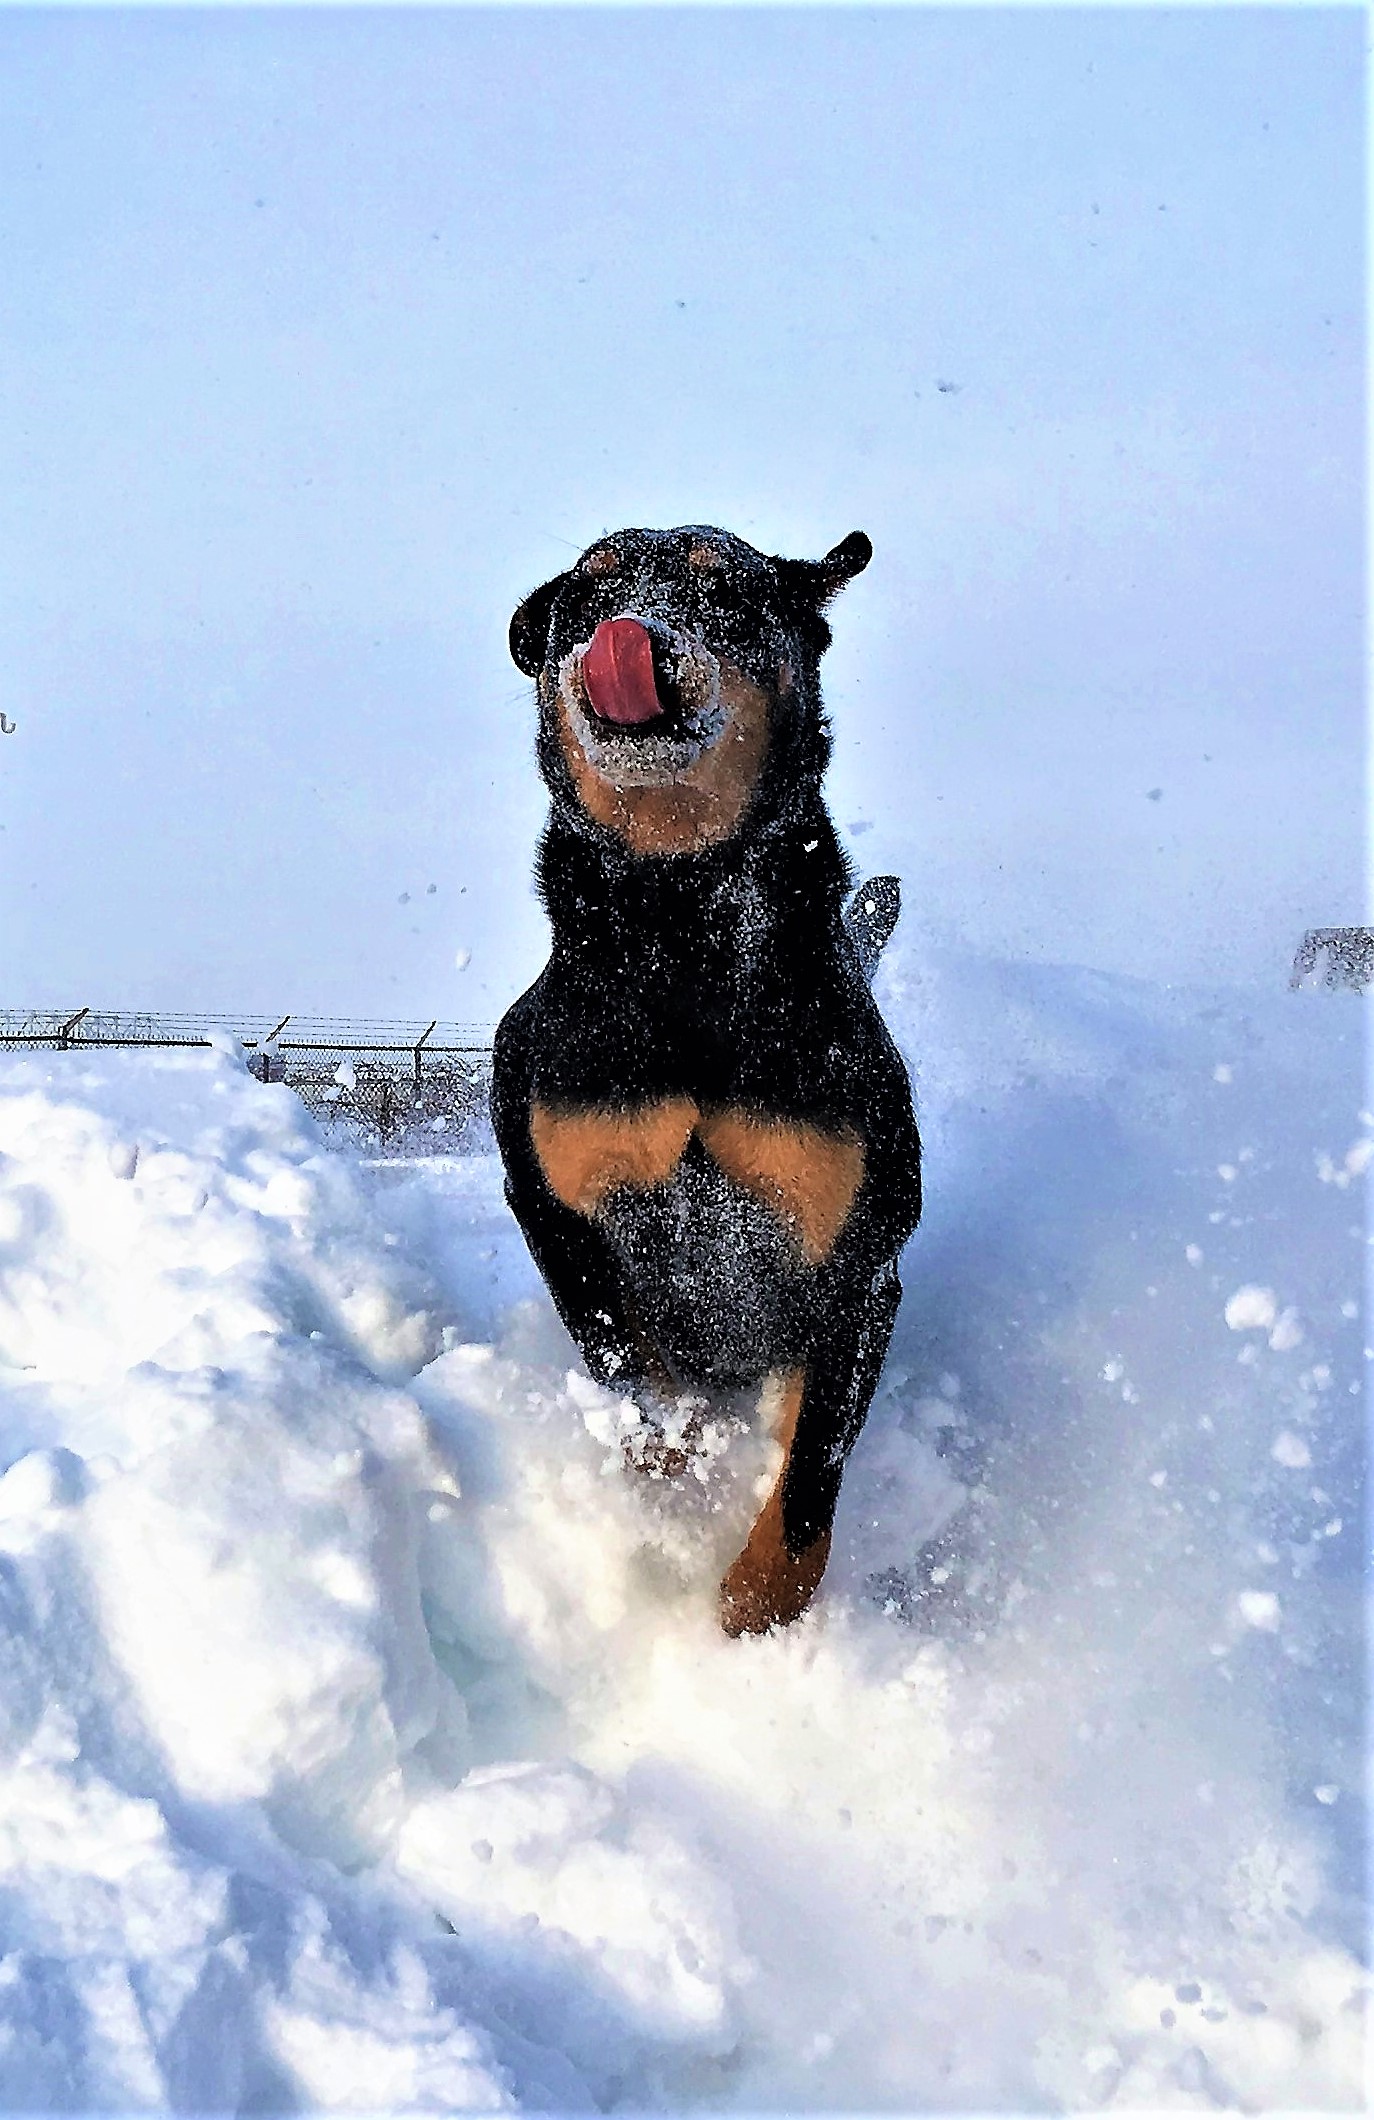 Snow taste so good!